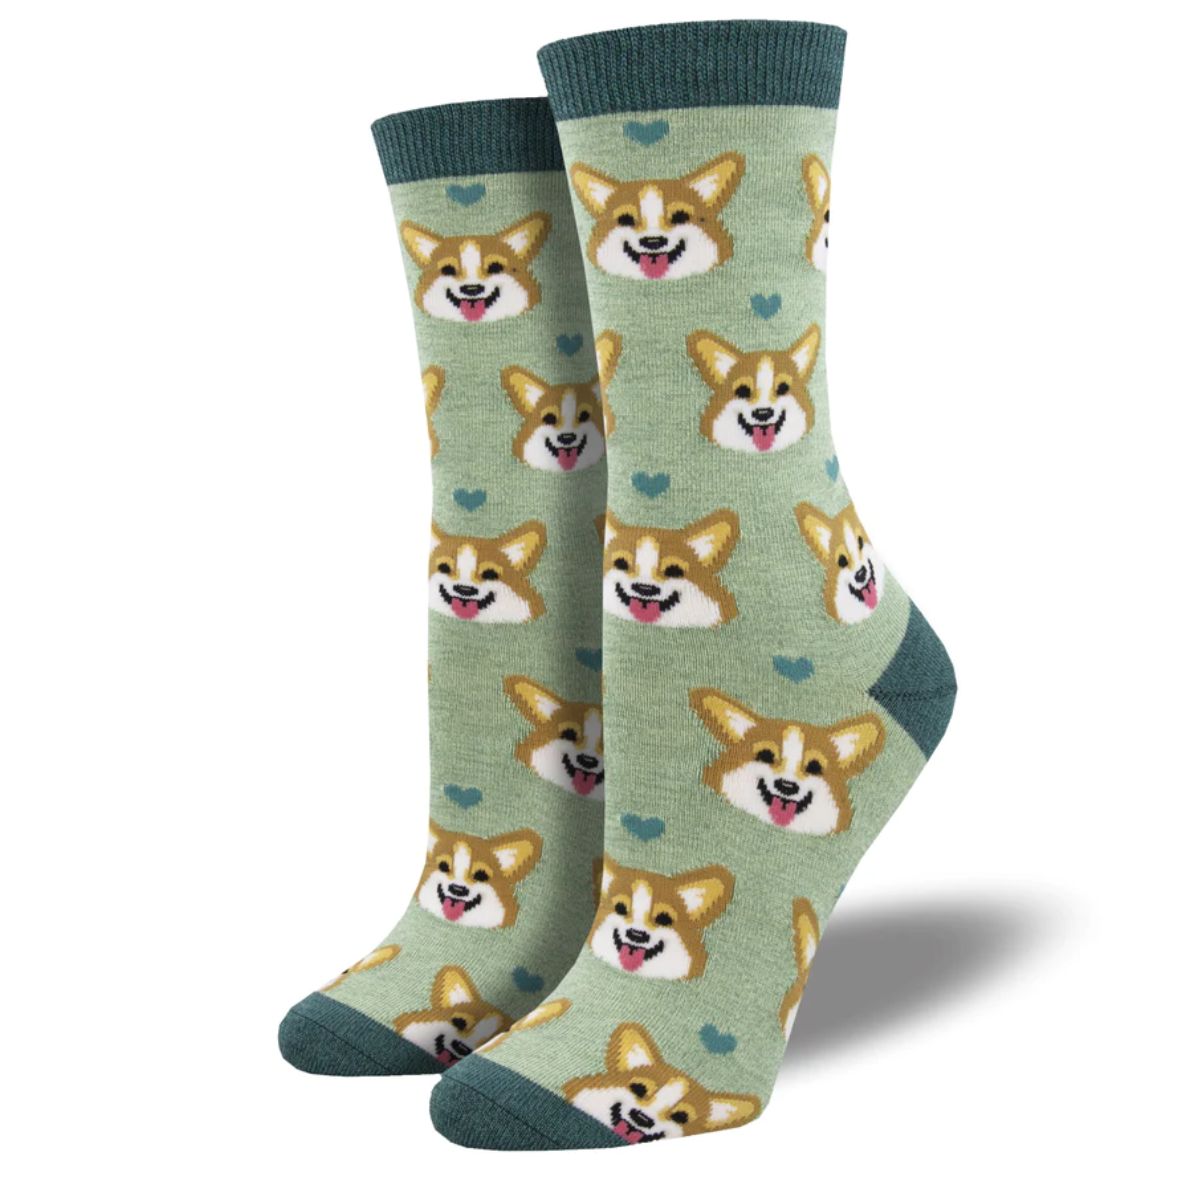 Corgi face socks a pair of light green crew socks with corgi dog face print